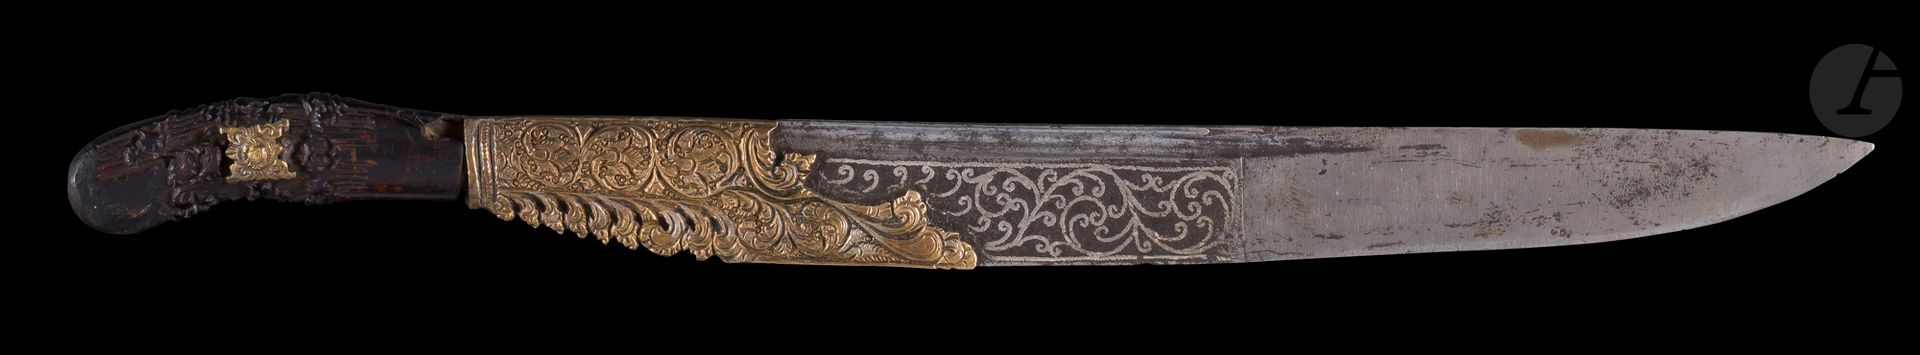 Null Betel knife piha kaetta, Sri Lanka, 19th century
Slightly curved blade with&hellip;